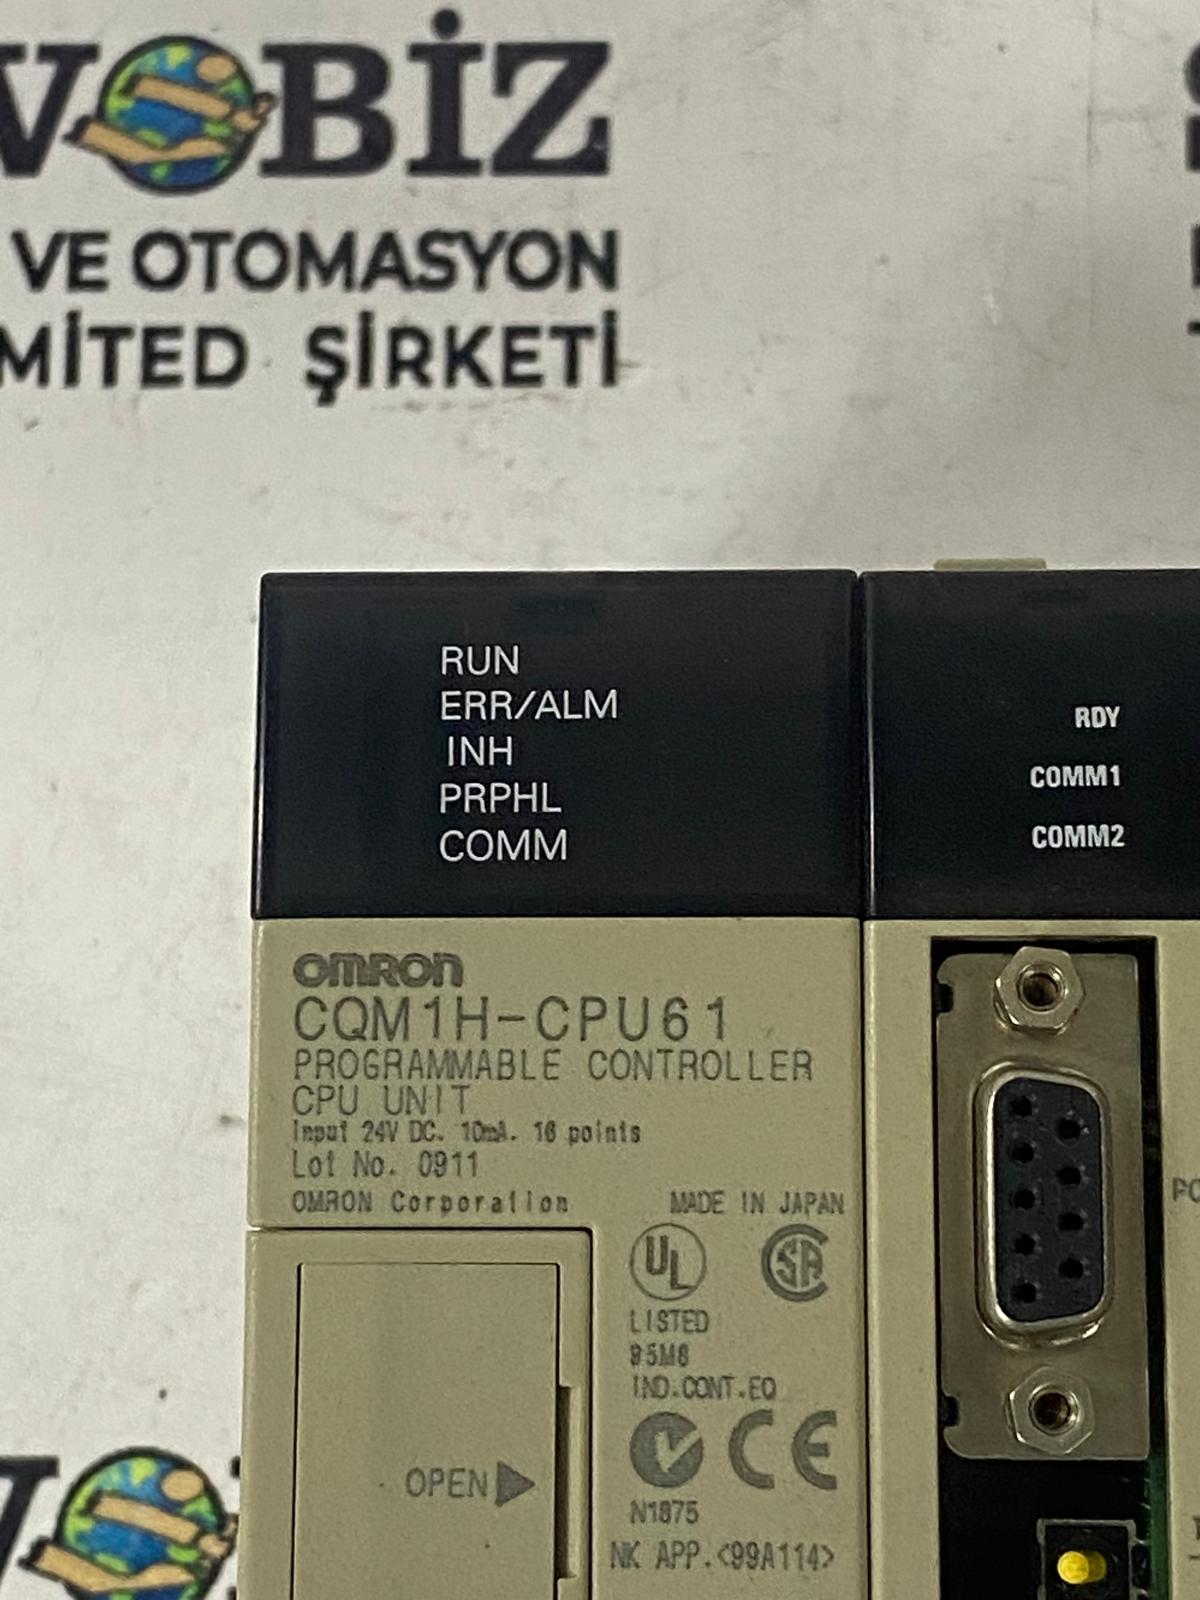 OMRON CQM1H-CPU61